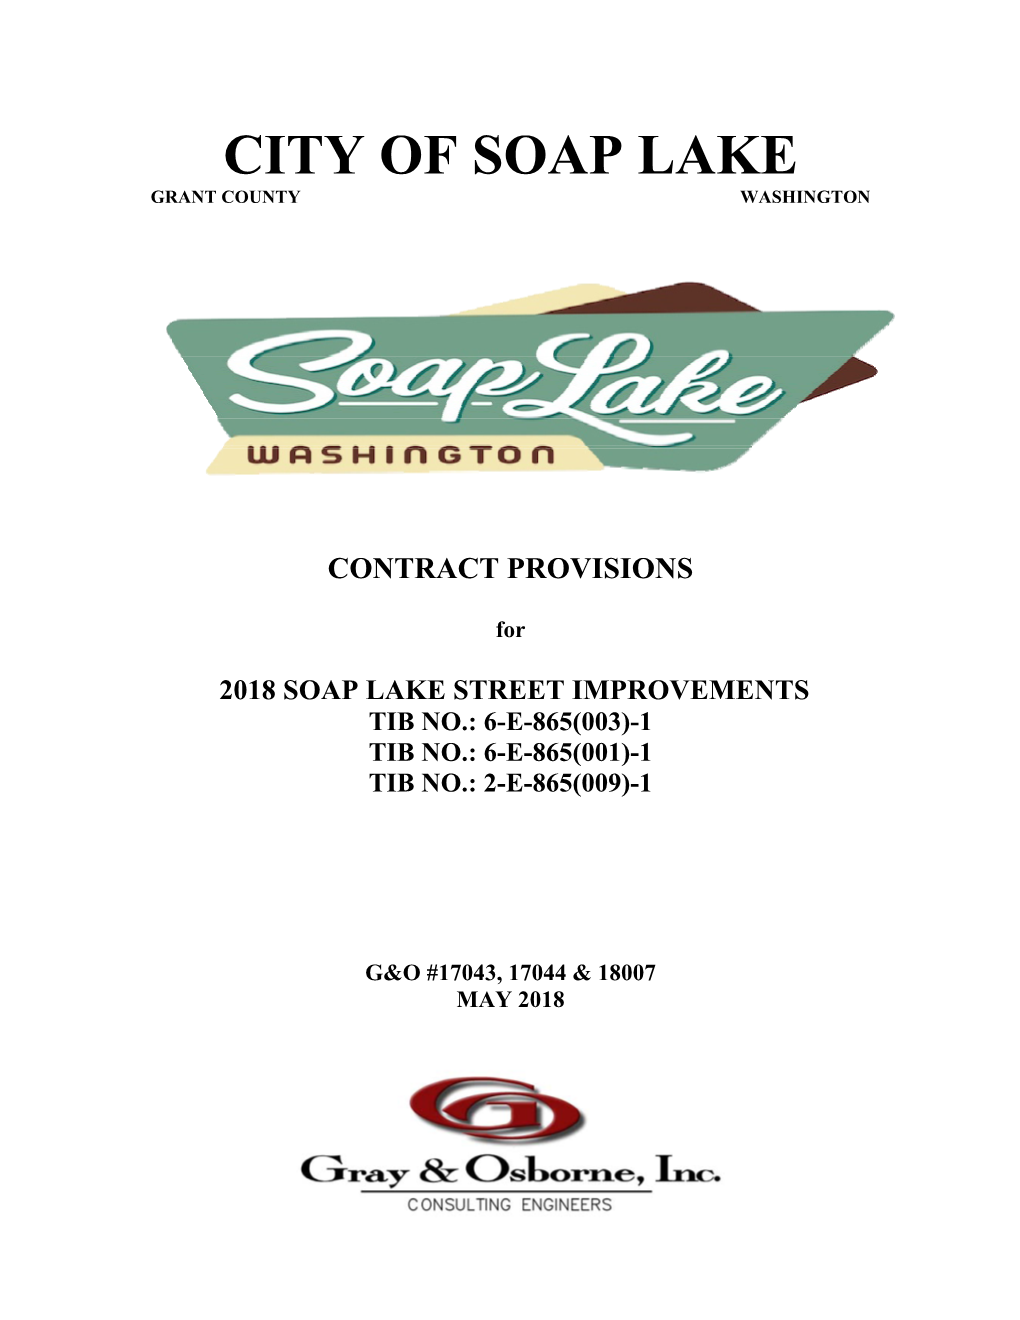 City of Soap Lake Grant County Washington